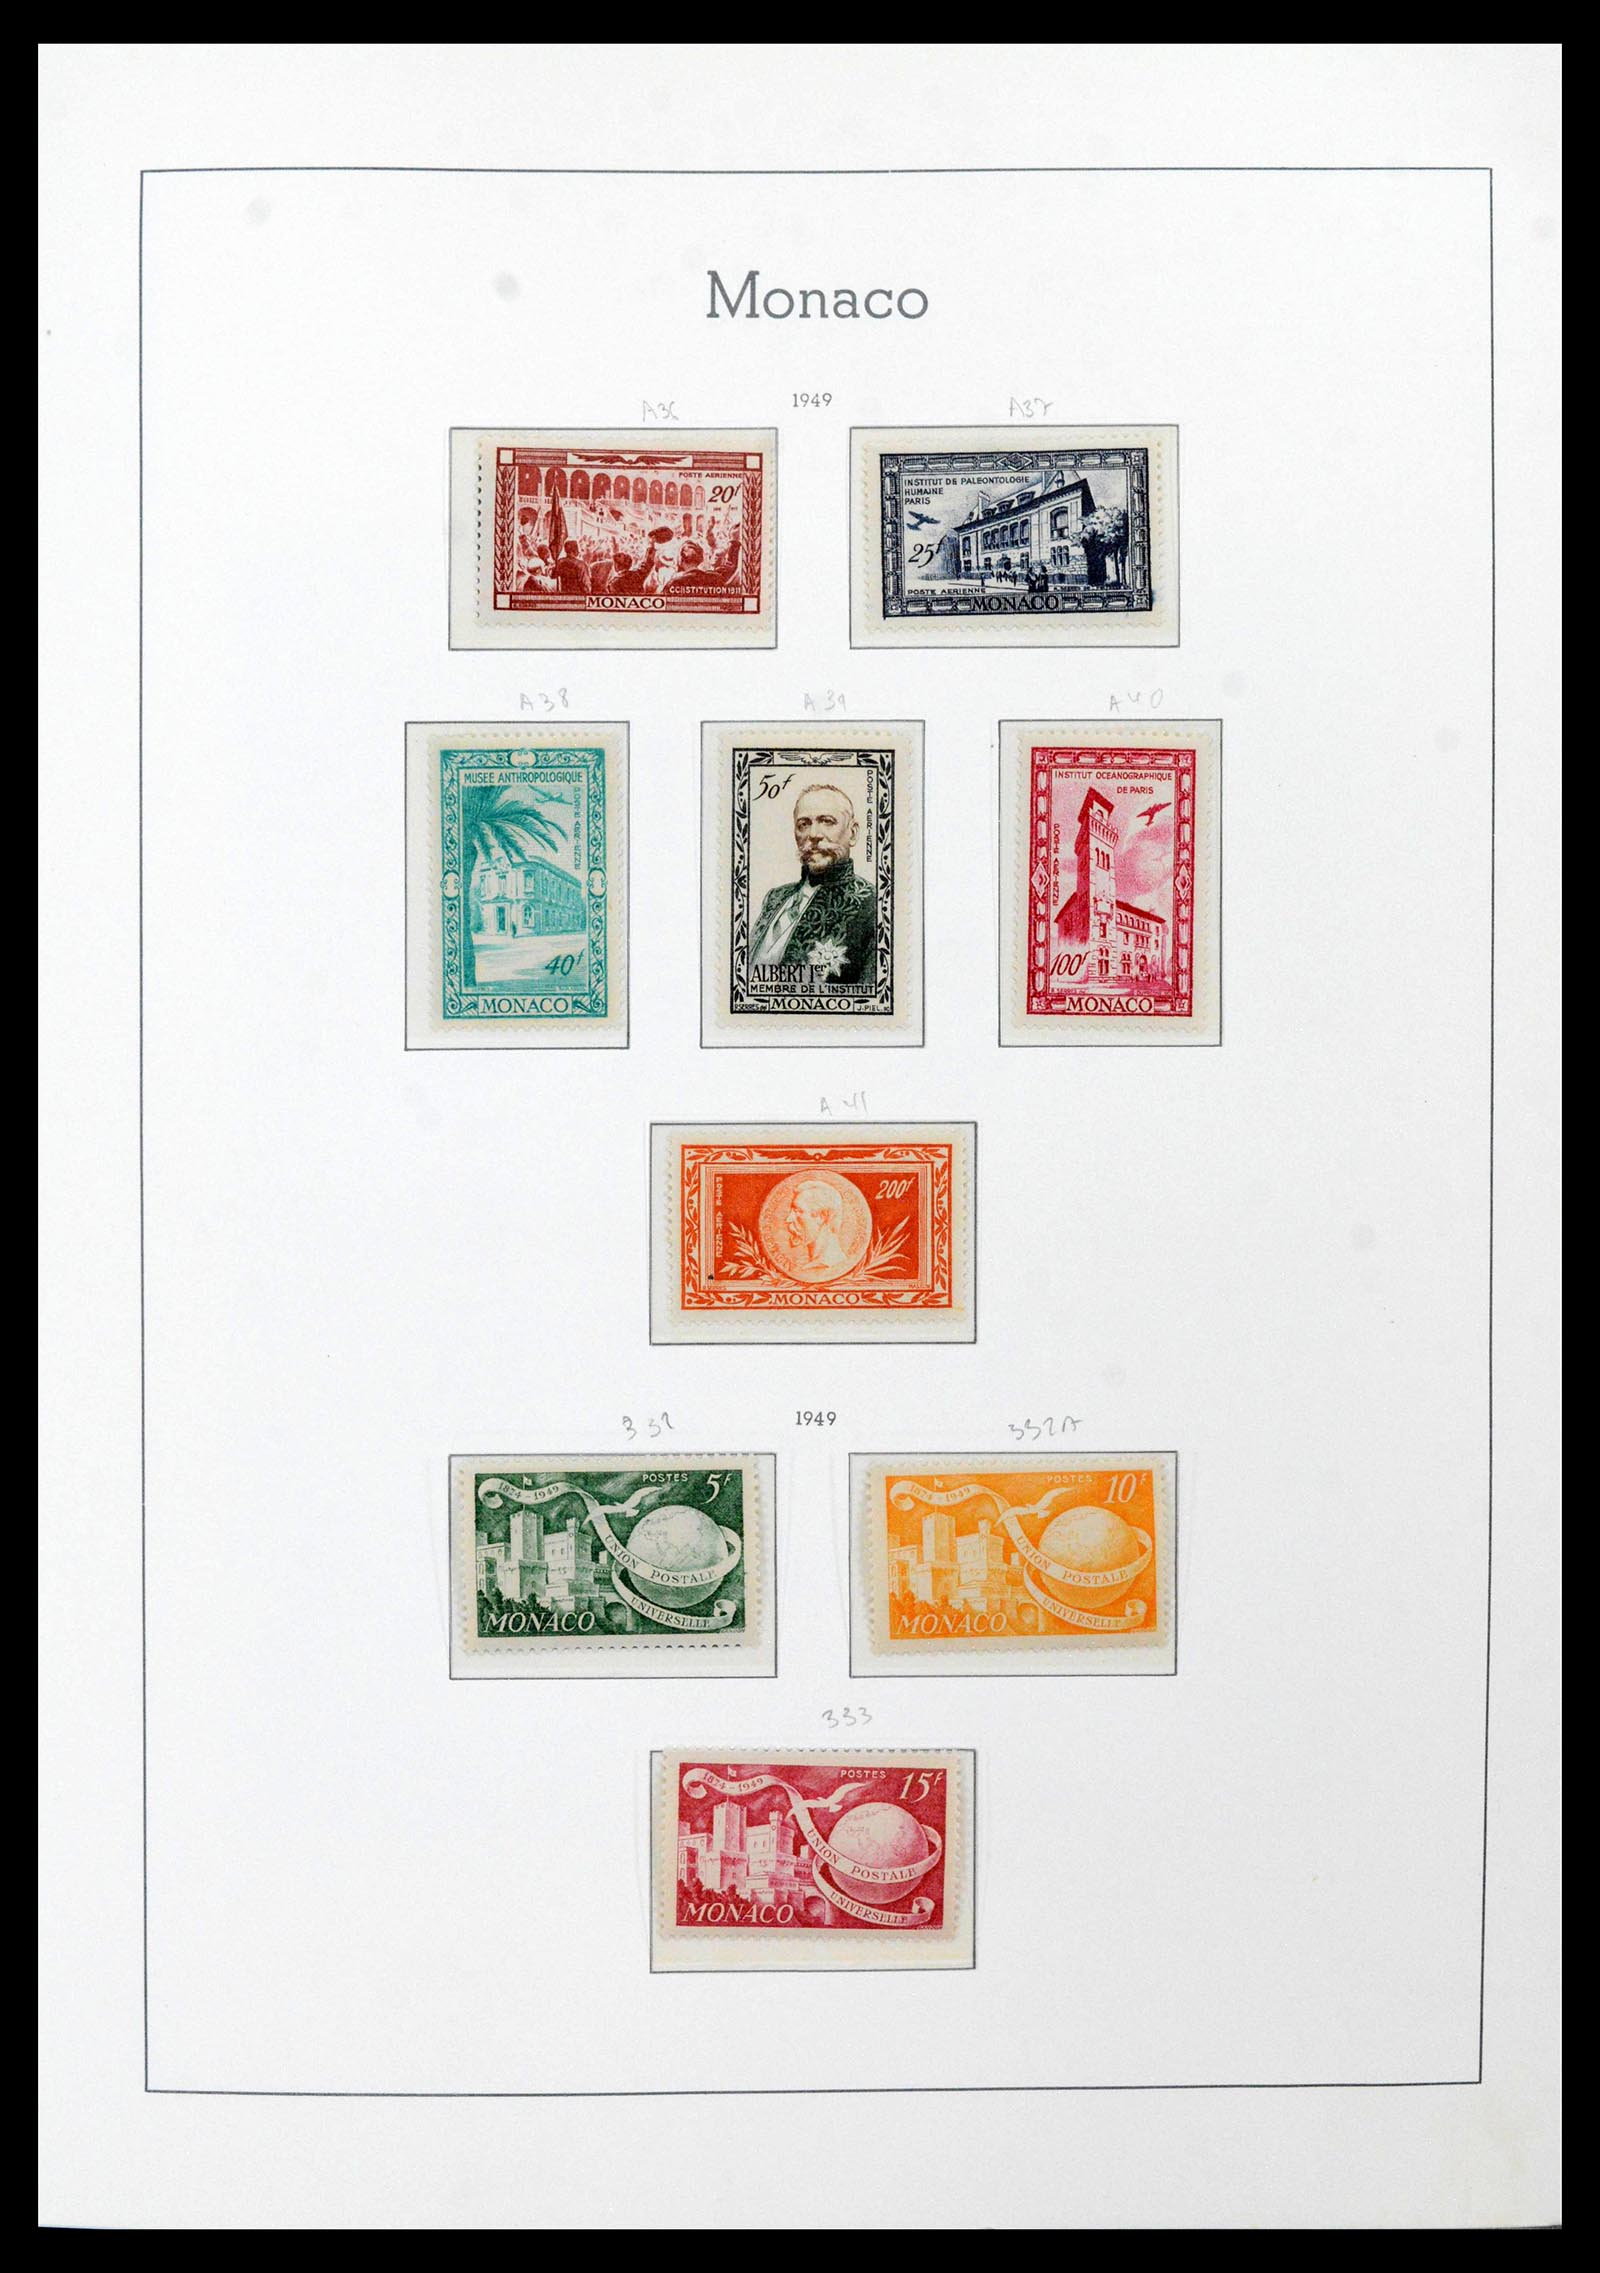 39250 0038 - Stamp collection 39250 Monaco 1885-1995.